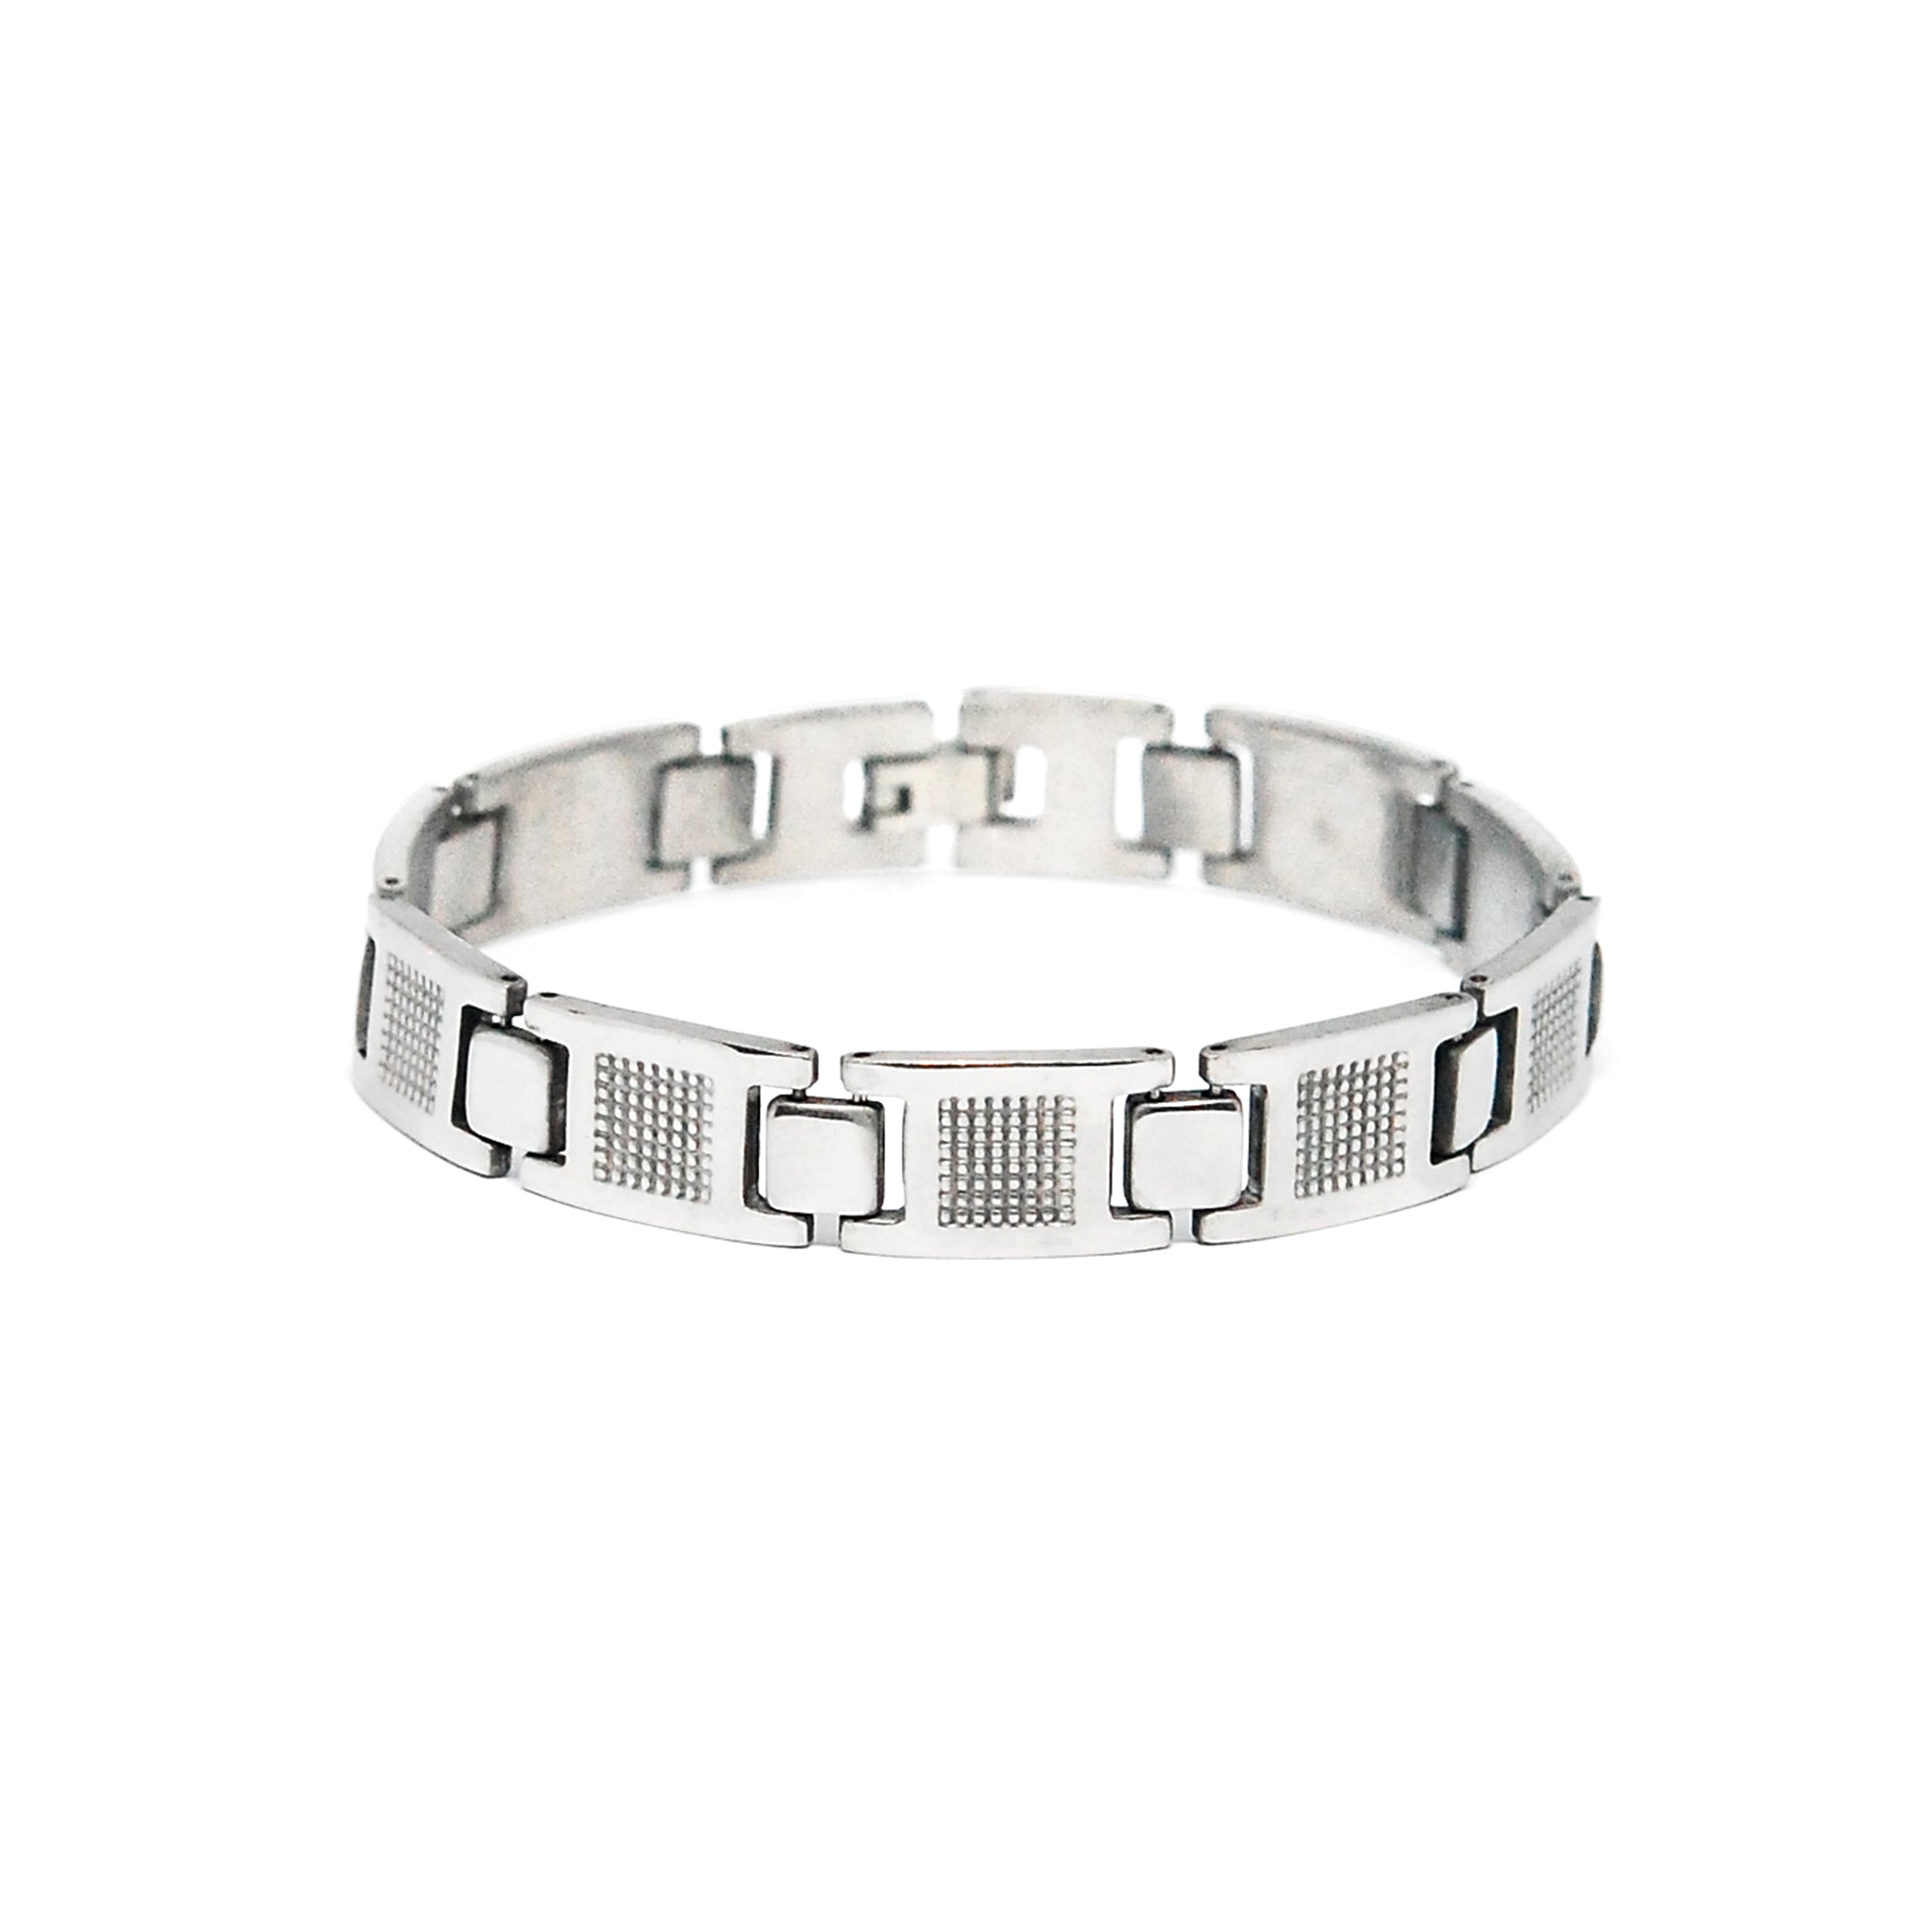 ESBL 6198: 8" S/S Square Grills Male Bracelet